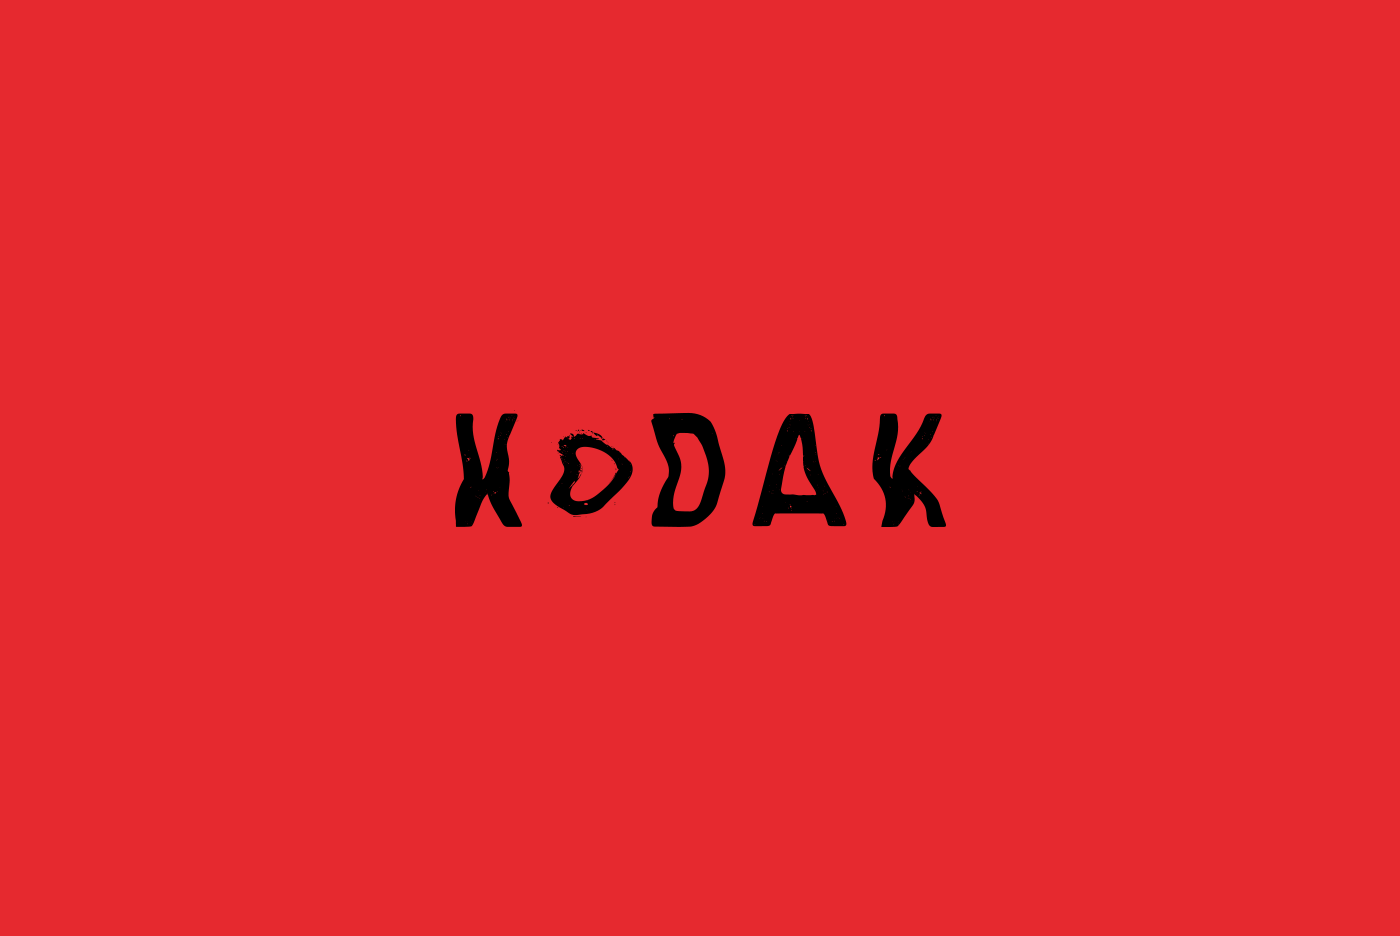 Visual Identity and Graphic Design for Kodak 